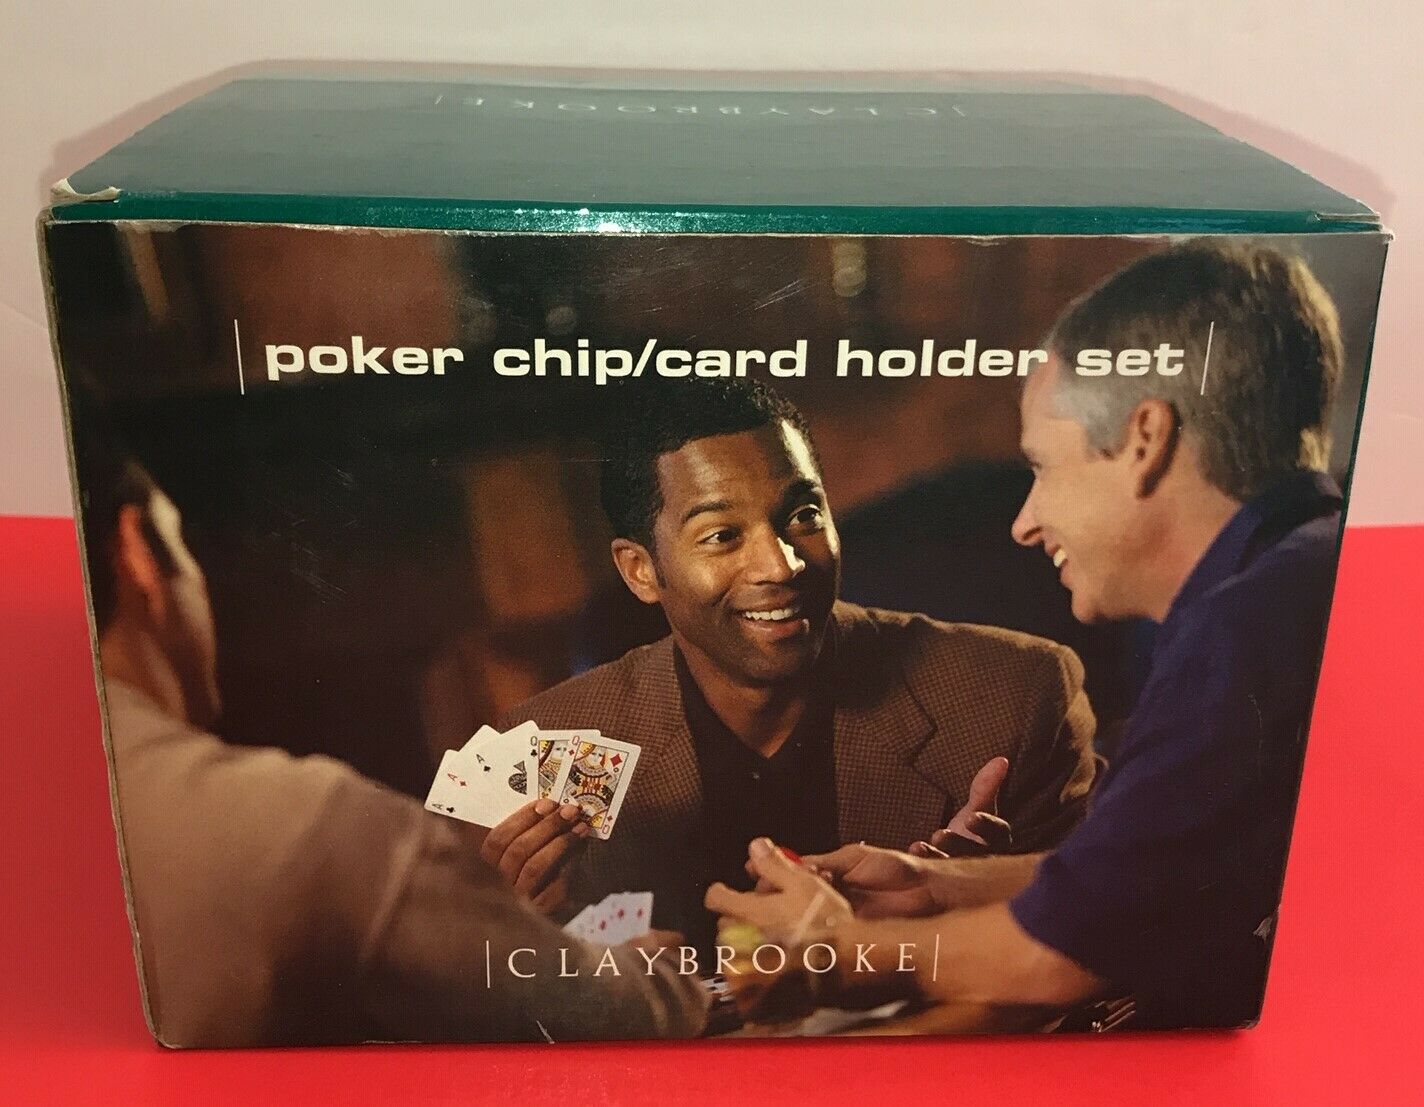 Claybrooke Poker Chip and Card Holder Set